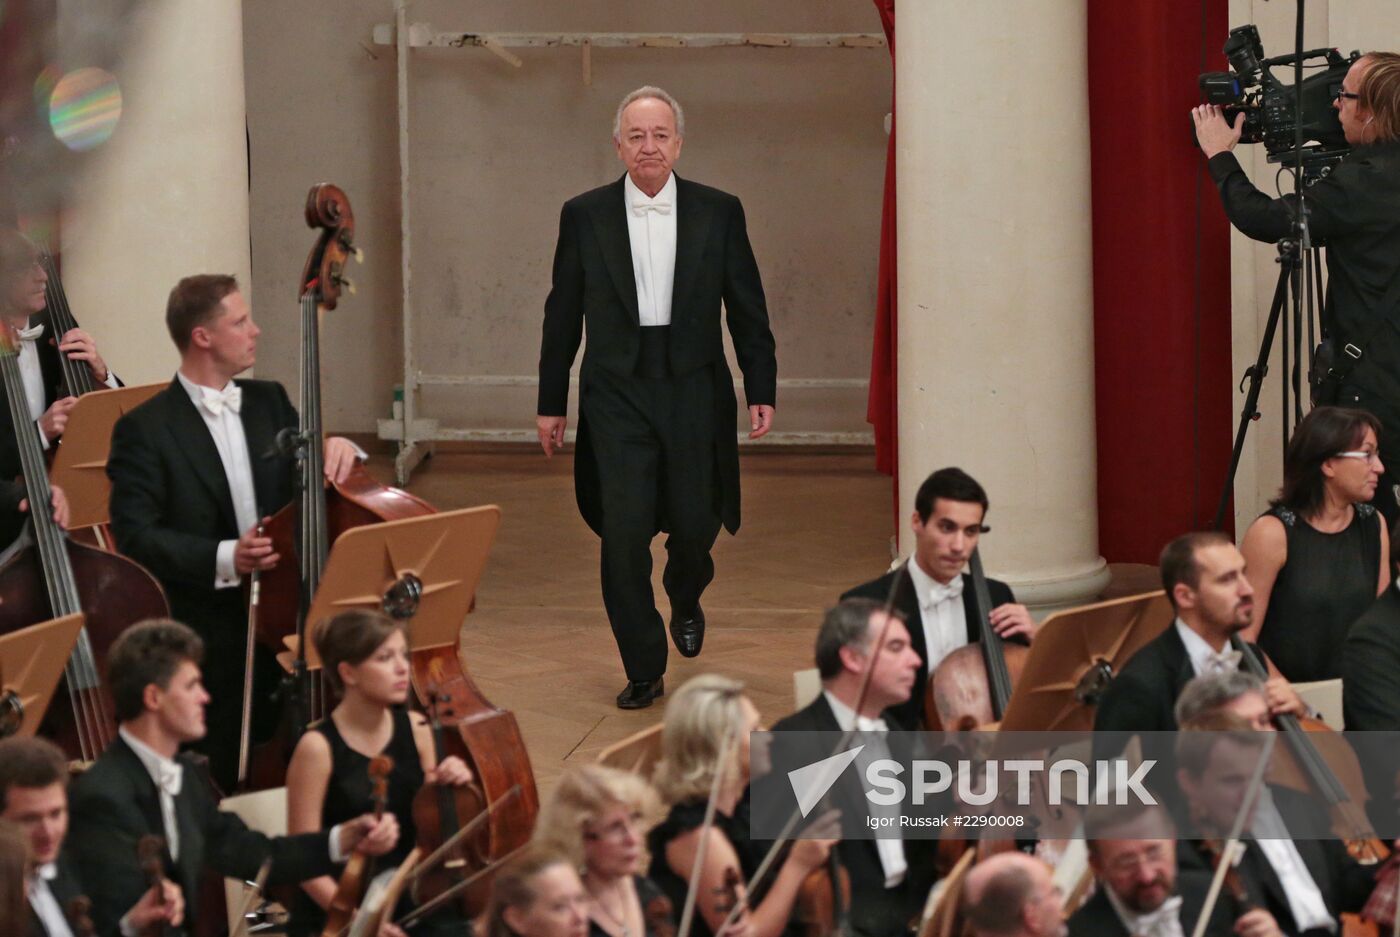 Shostakovich St. Petersburg Philharmonic season opening